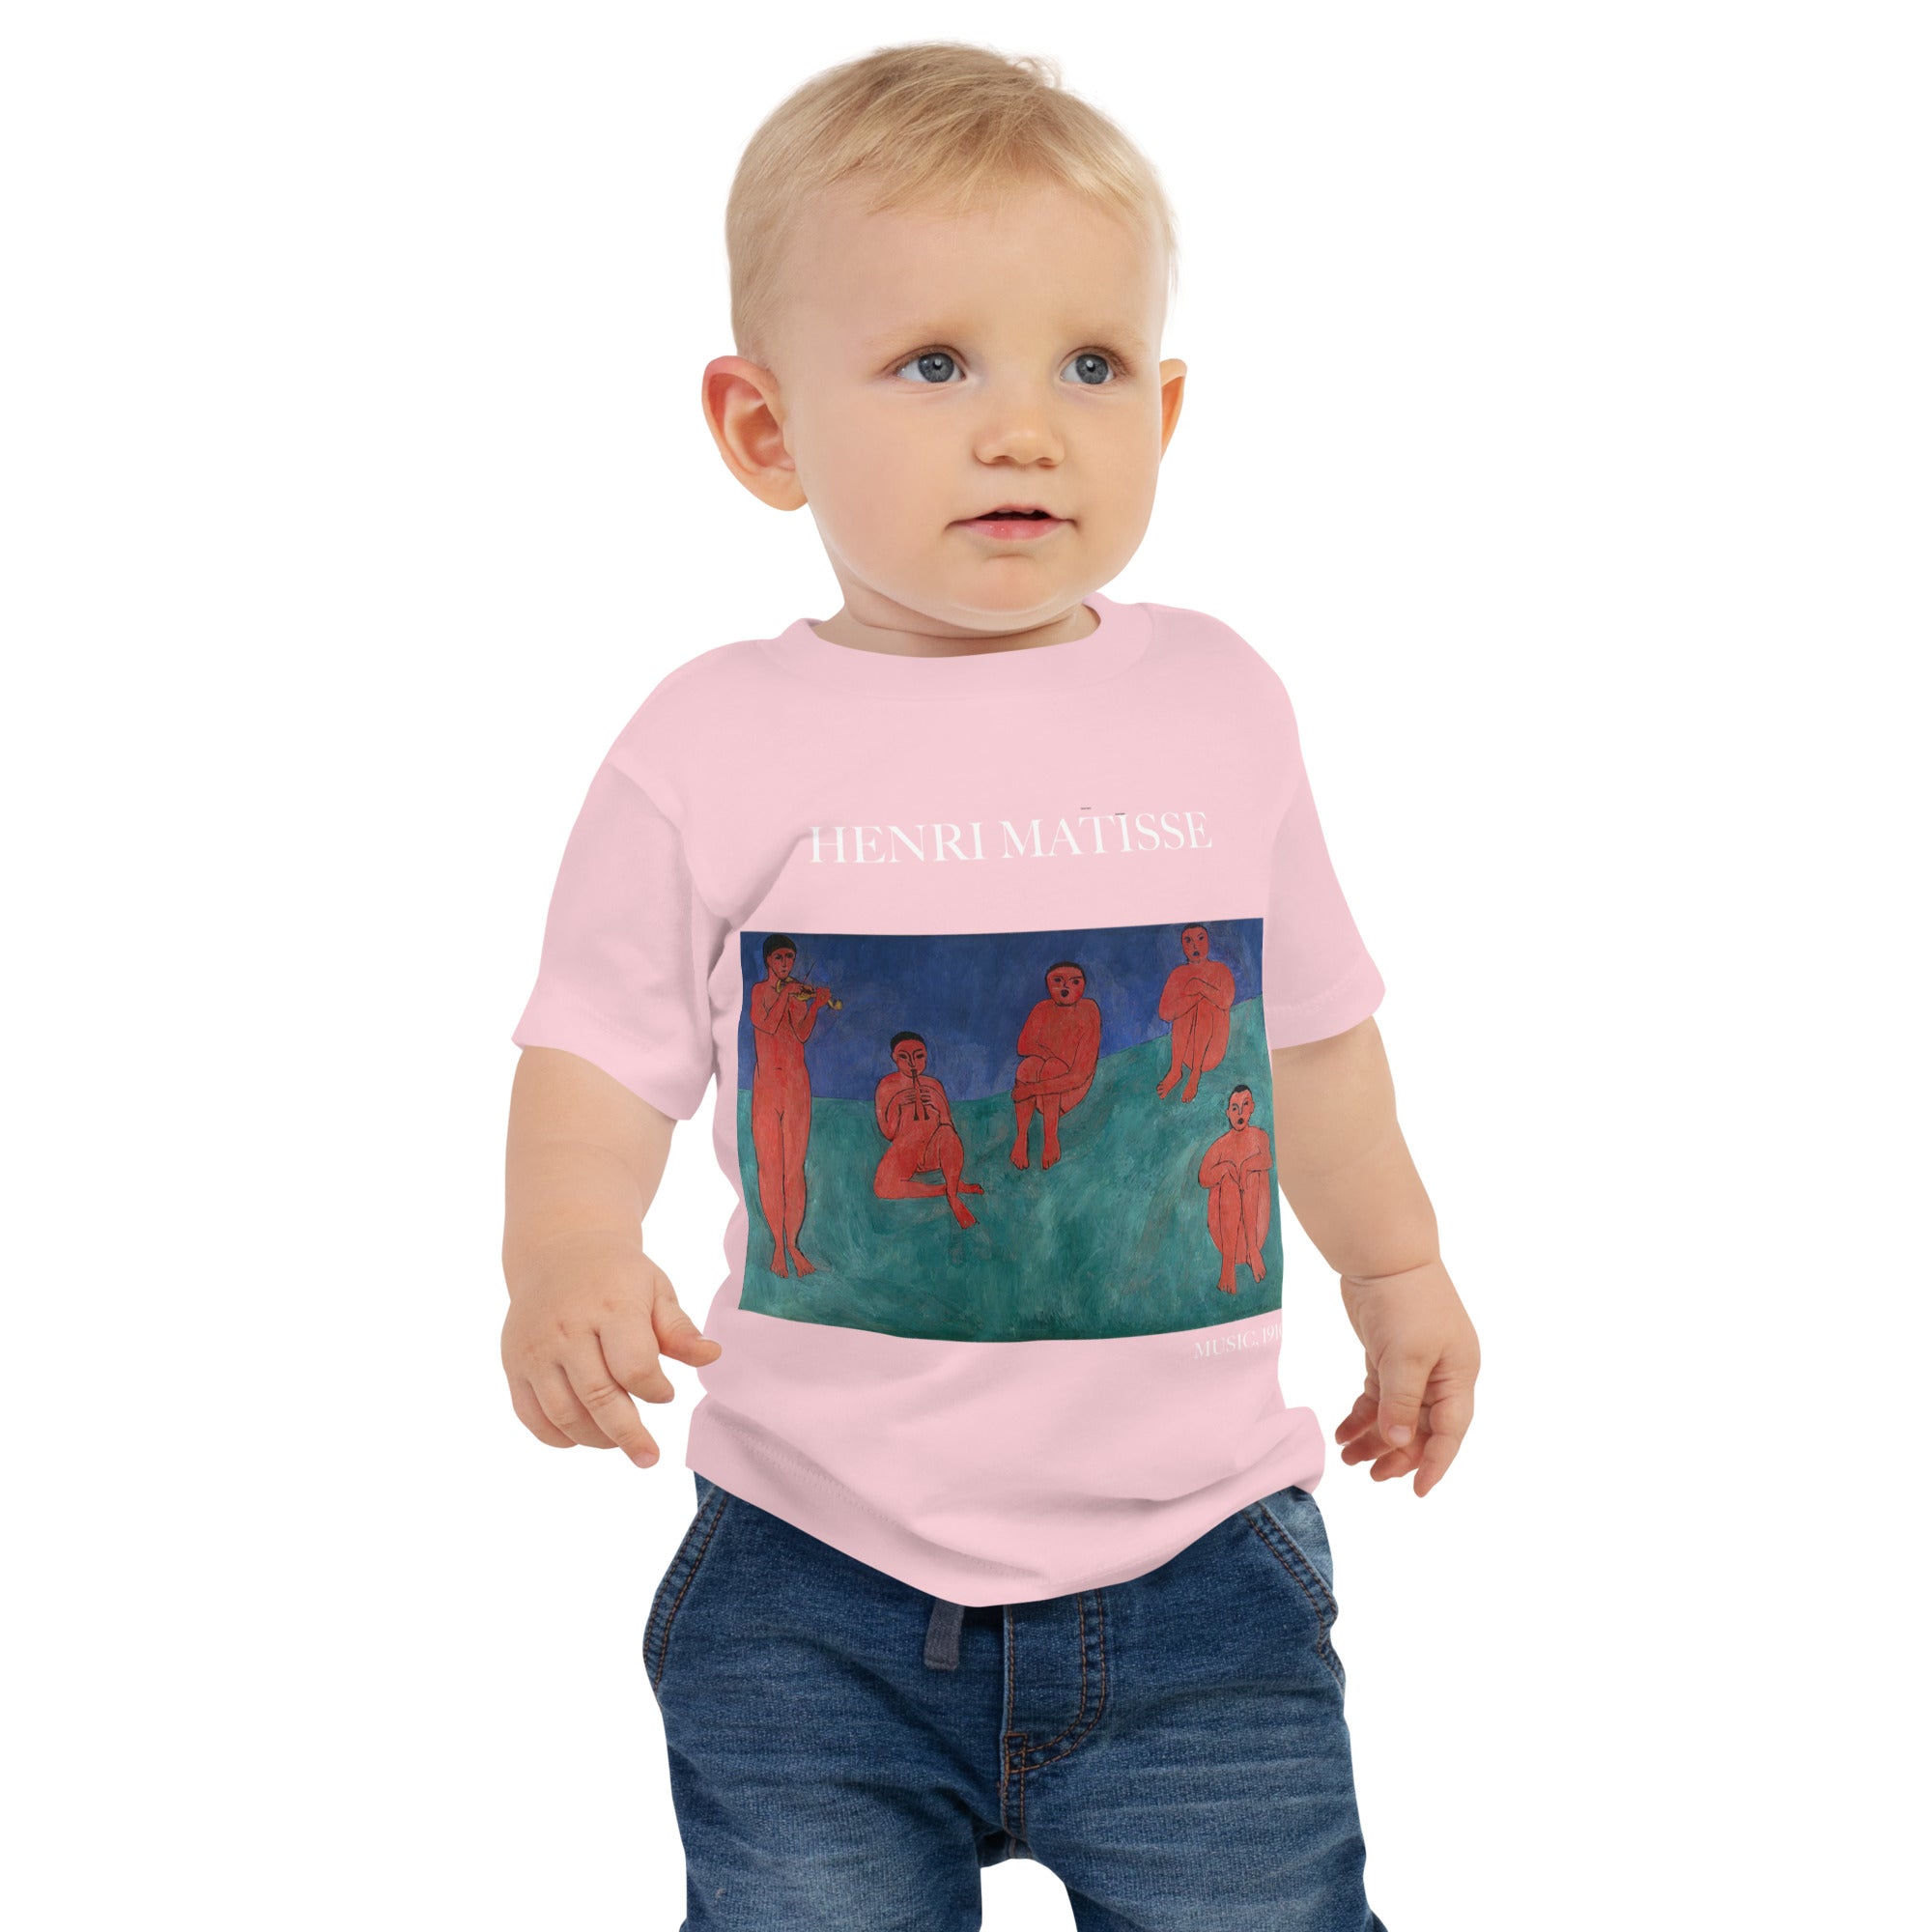 Henri Matisse „Musik“ Berühmtes Gemälde Baby-T-Shirt | Premium Baby Art T-Shirt